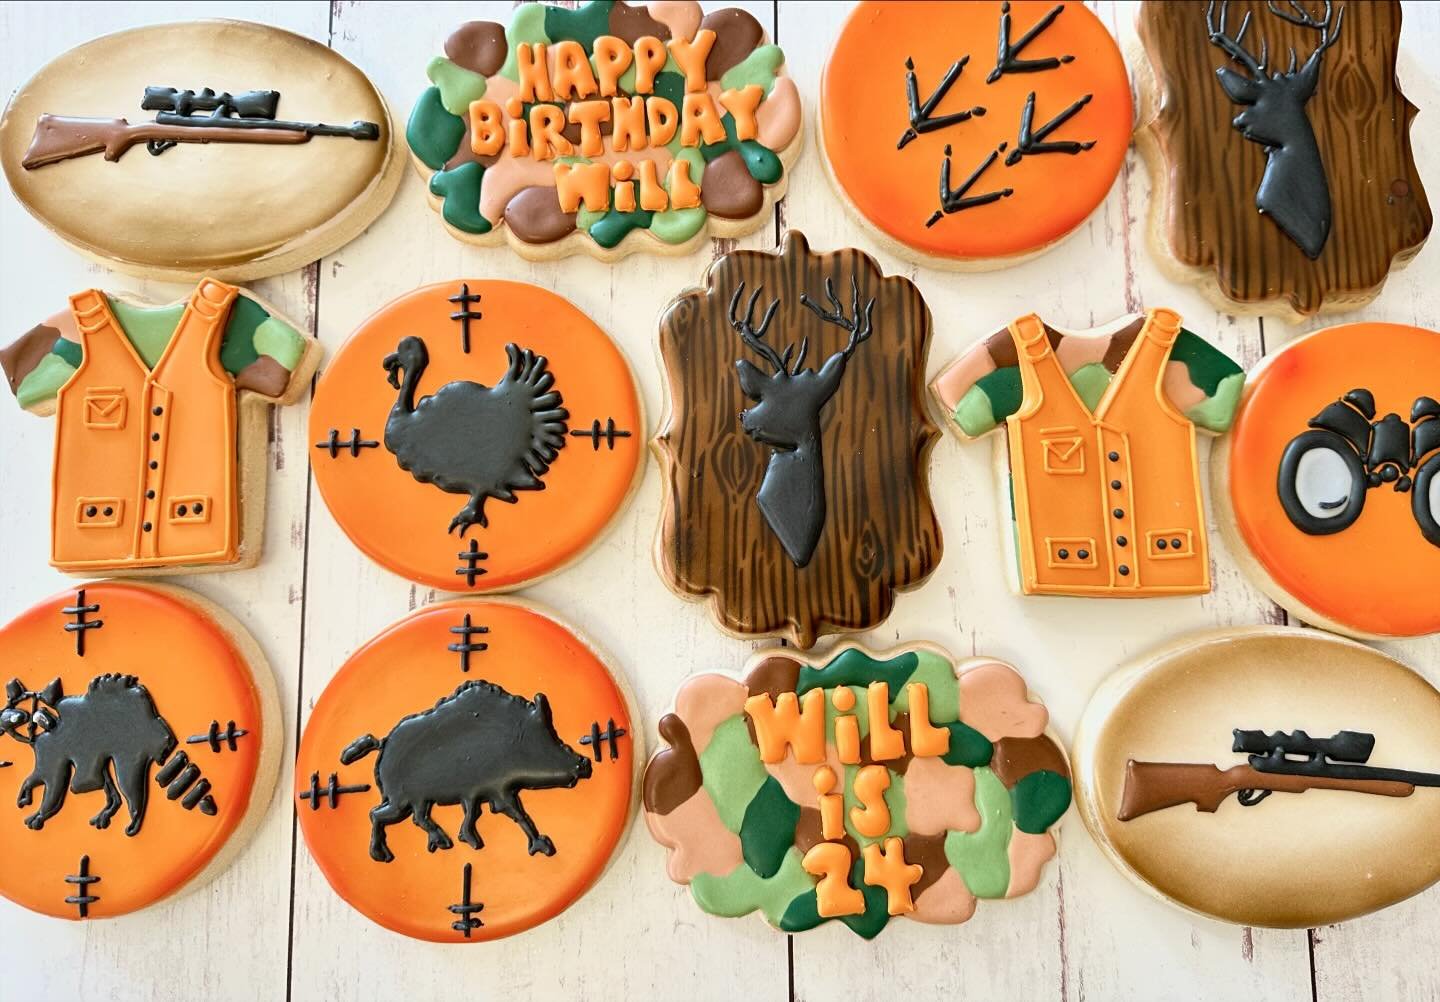 Happy 24th birthday Will! I hope you enjoyed your #huntingcookies

#jojoscookieboutique #hayesvillenc #customcookies #partyfavors #decoratedcookies